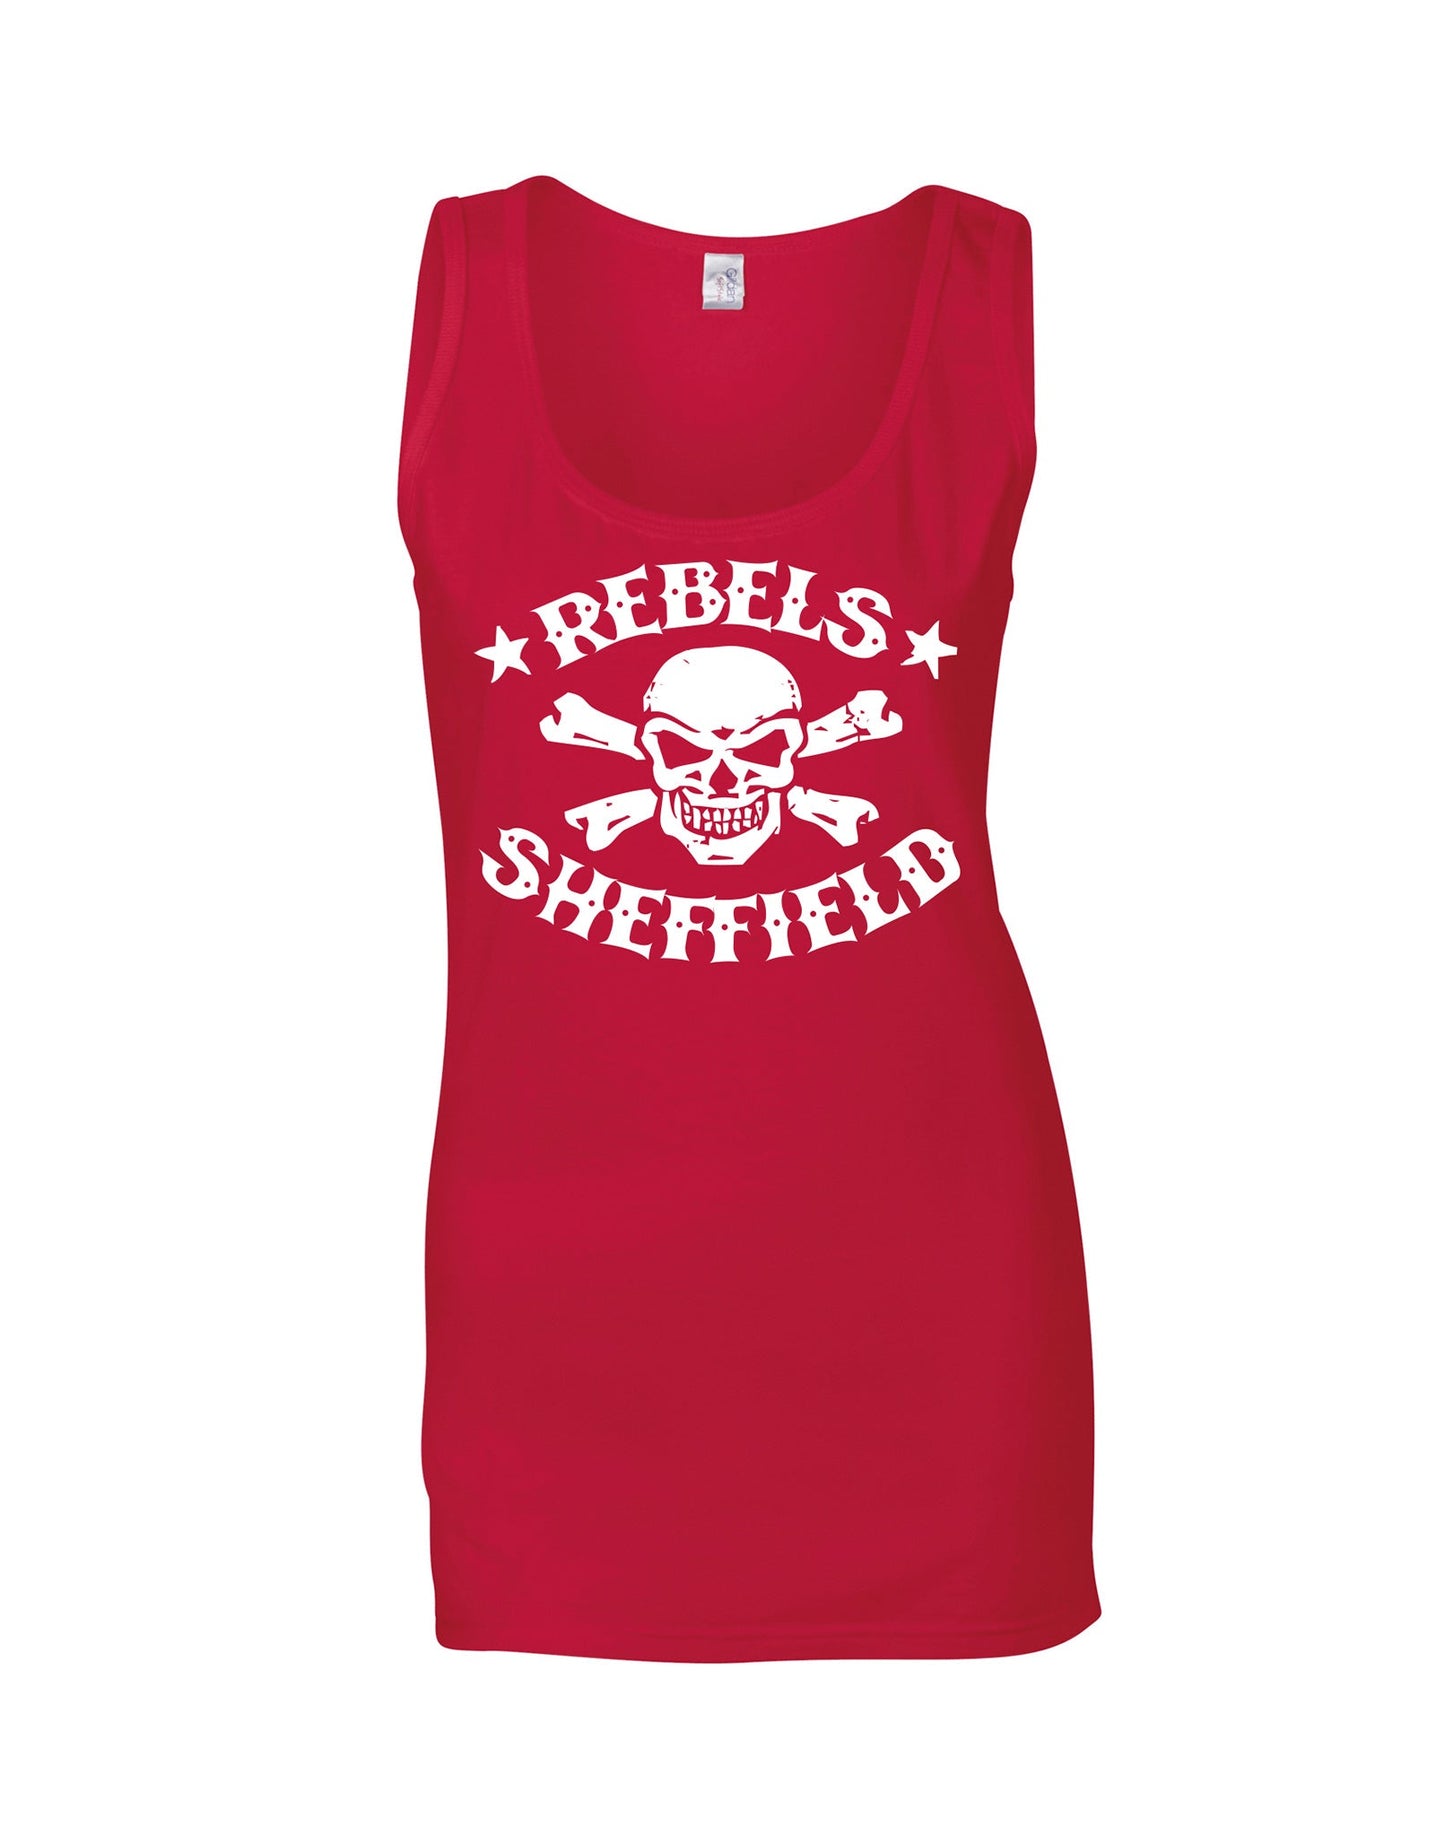 Rebels skull crossbones ladies fit vest - various colours - Dirty Stop Outs